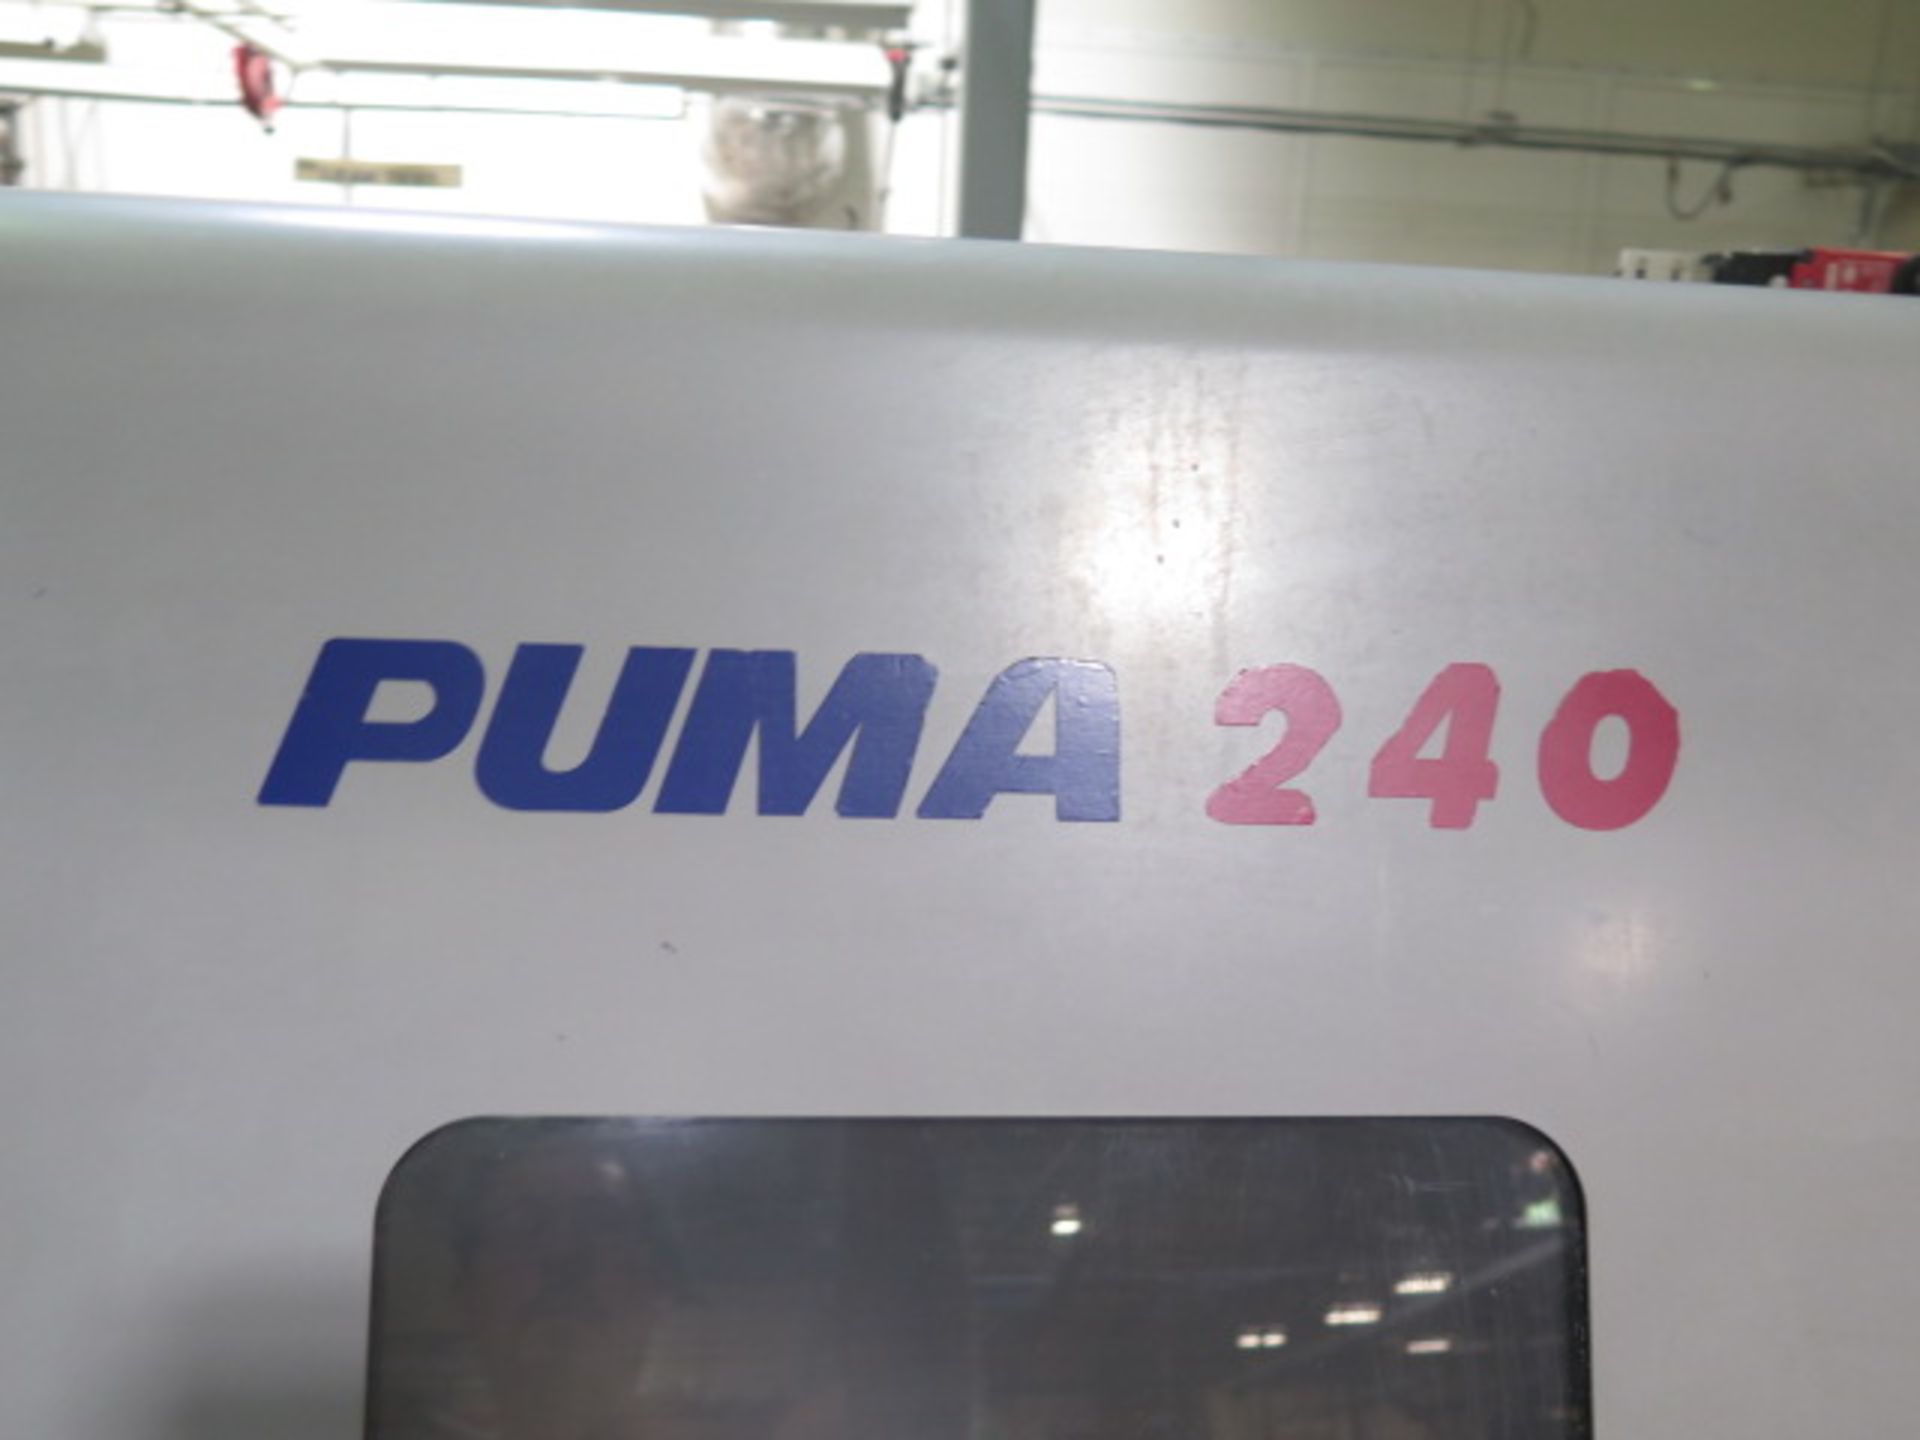 2005 Doosan PUMA240B CNC Turning Center s/n PM241566 w/ Fanuc Series 0i-TB Controls, SOLD AS IS - Image 12 of 18